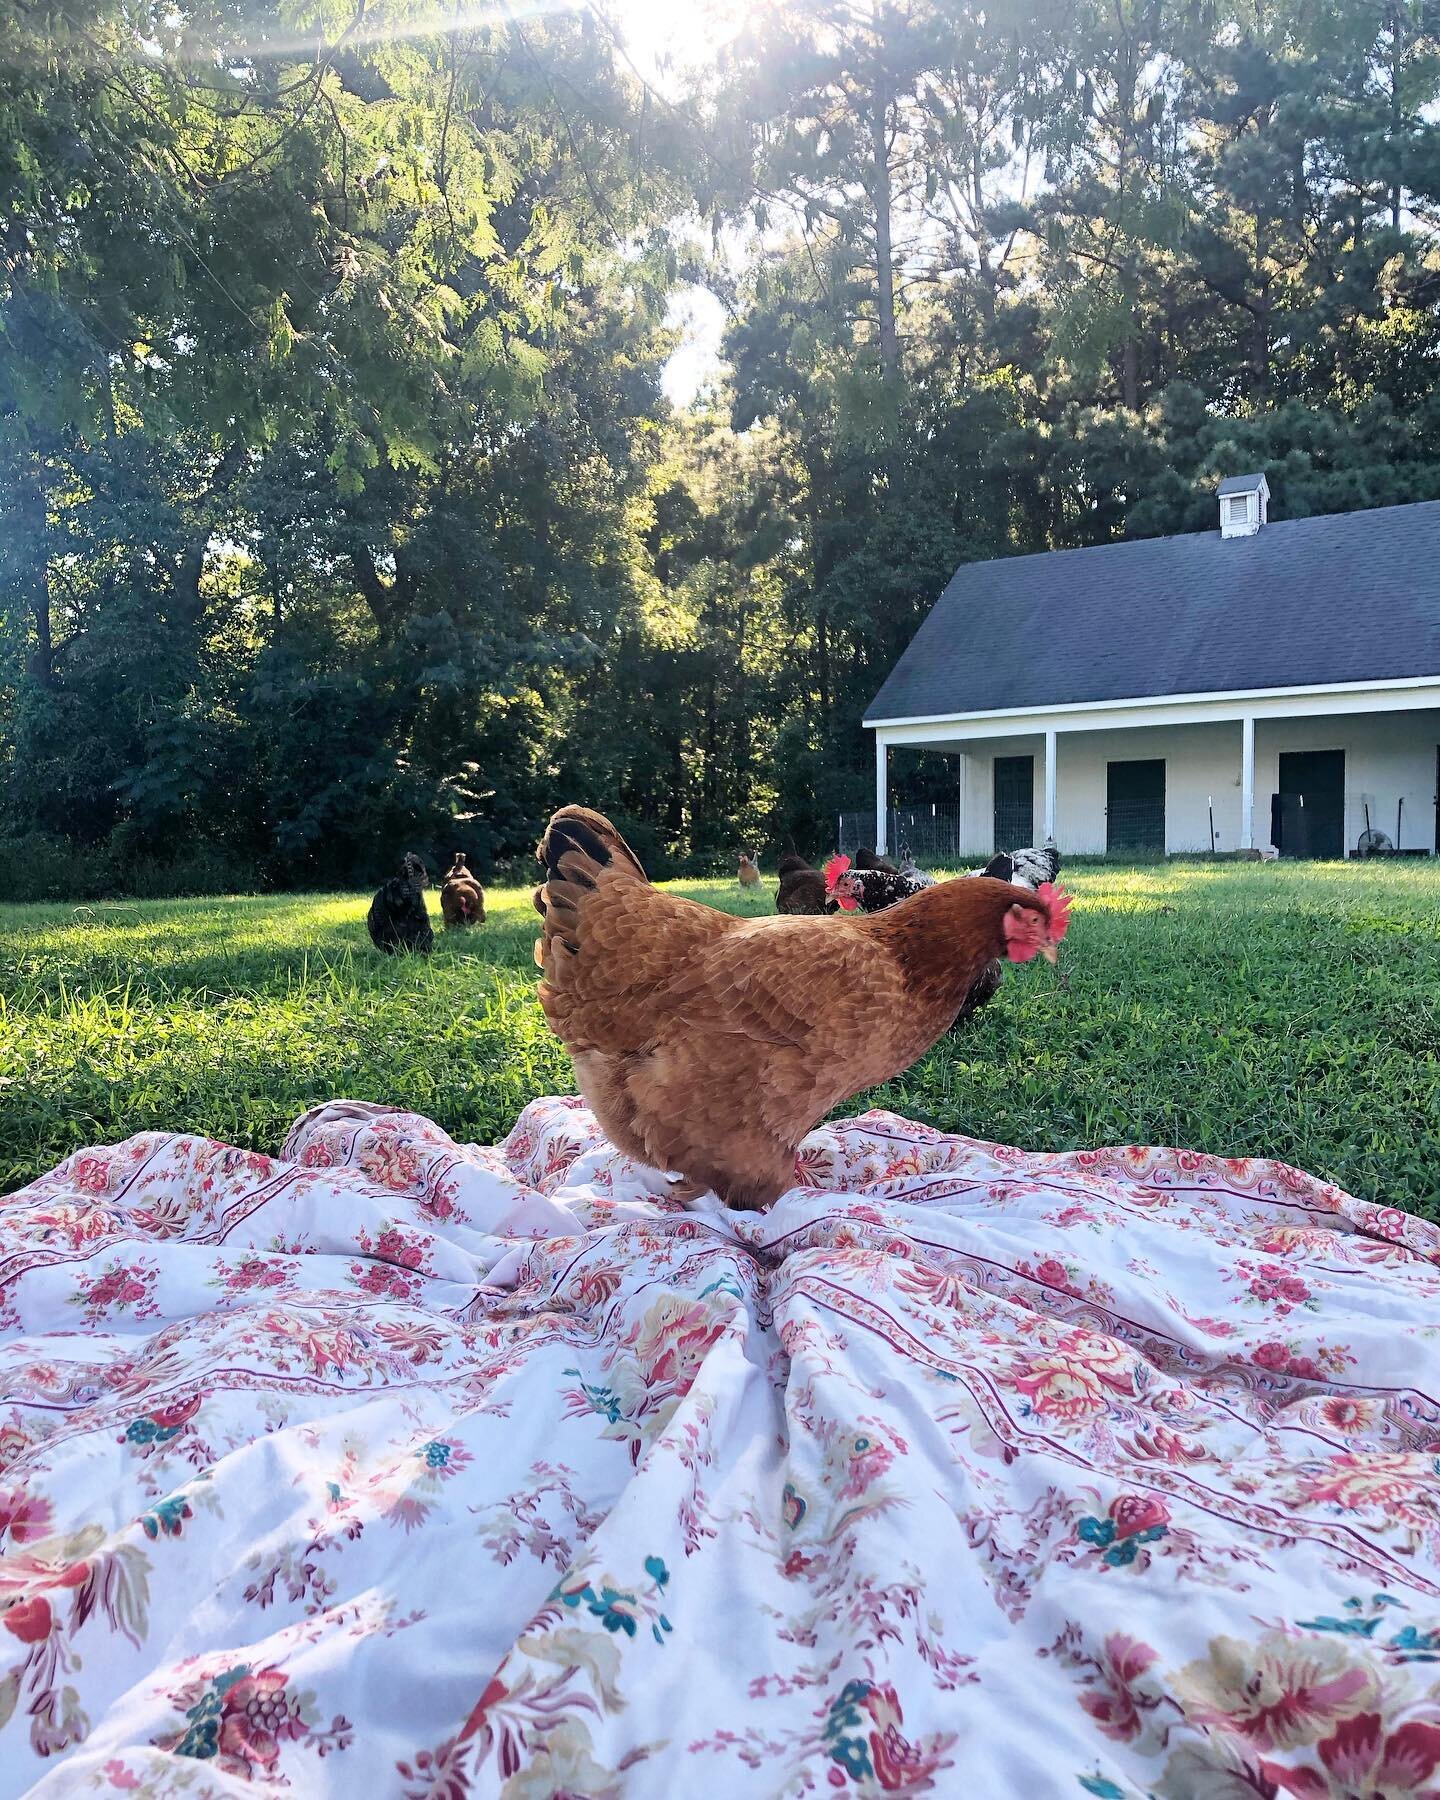 Cinnamon 🧡

#chickens #backyardgarden #backyardchickens #friends #wonder #curiosity #peace #cinnamon #pets #petchickens #love